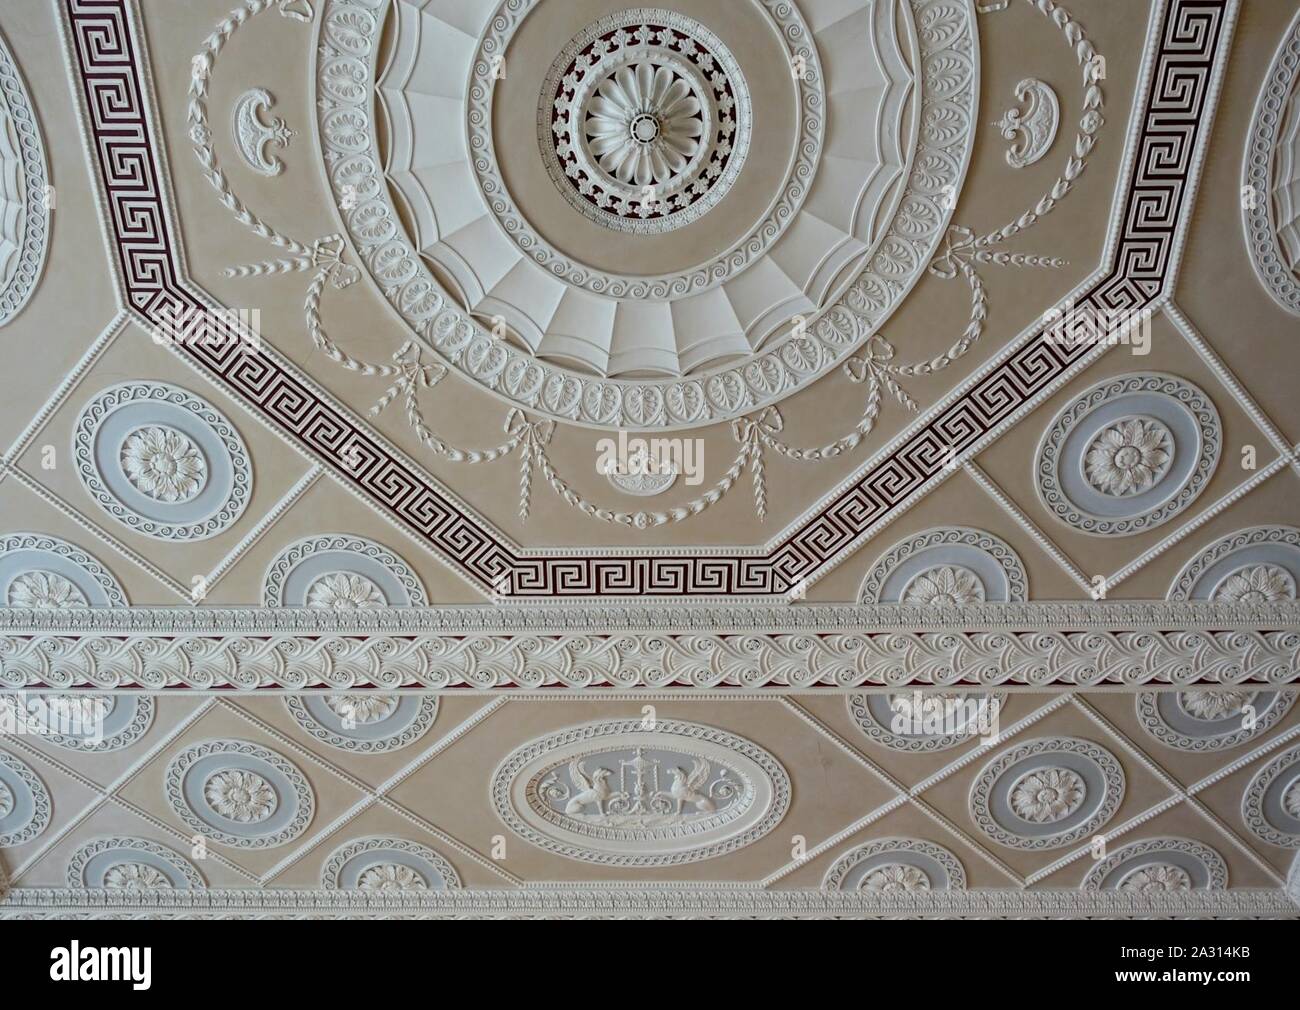 Eingangshalle Decke - das Harewood House - West Yorkshire, England - Stockfoto